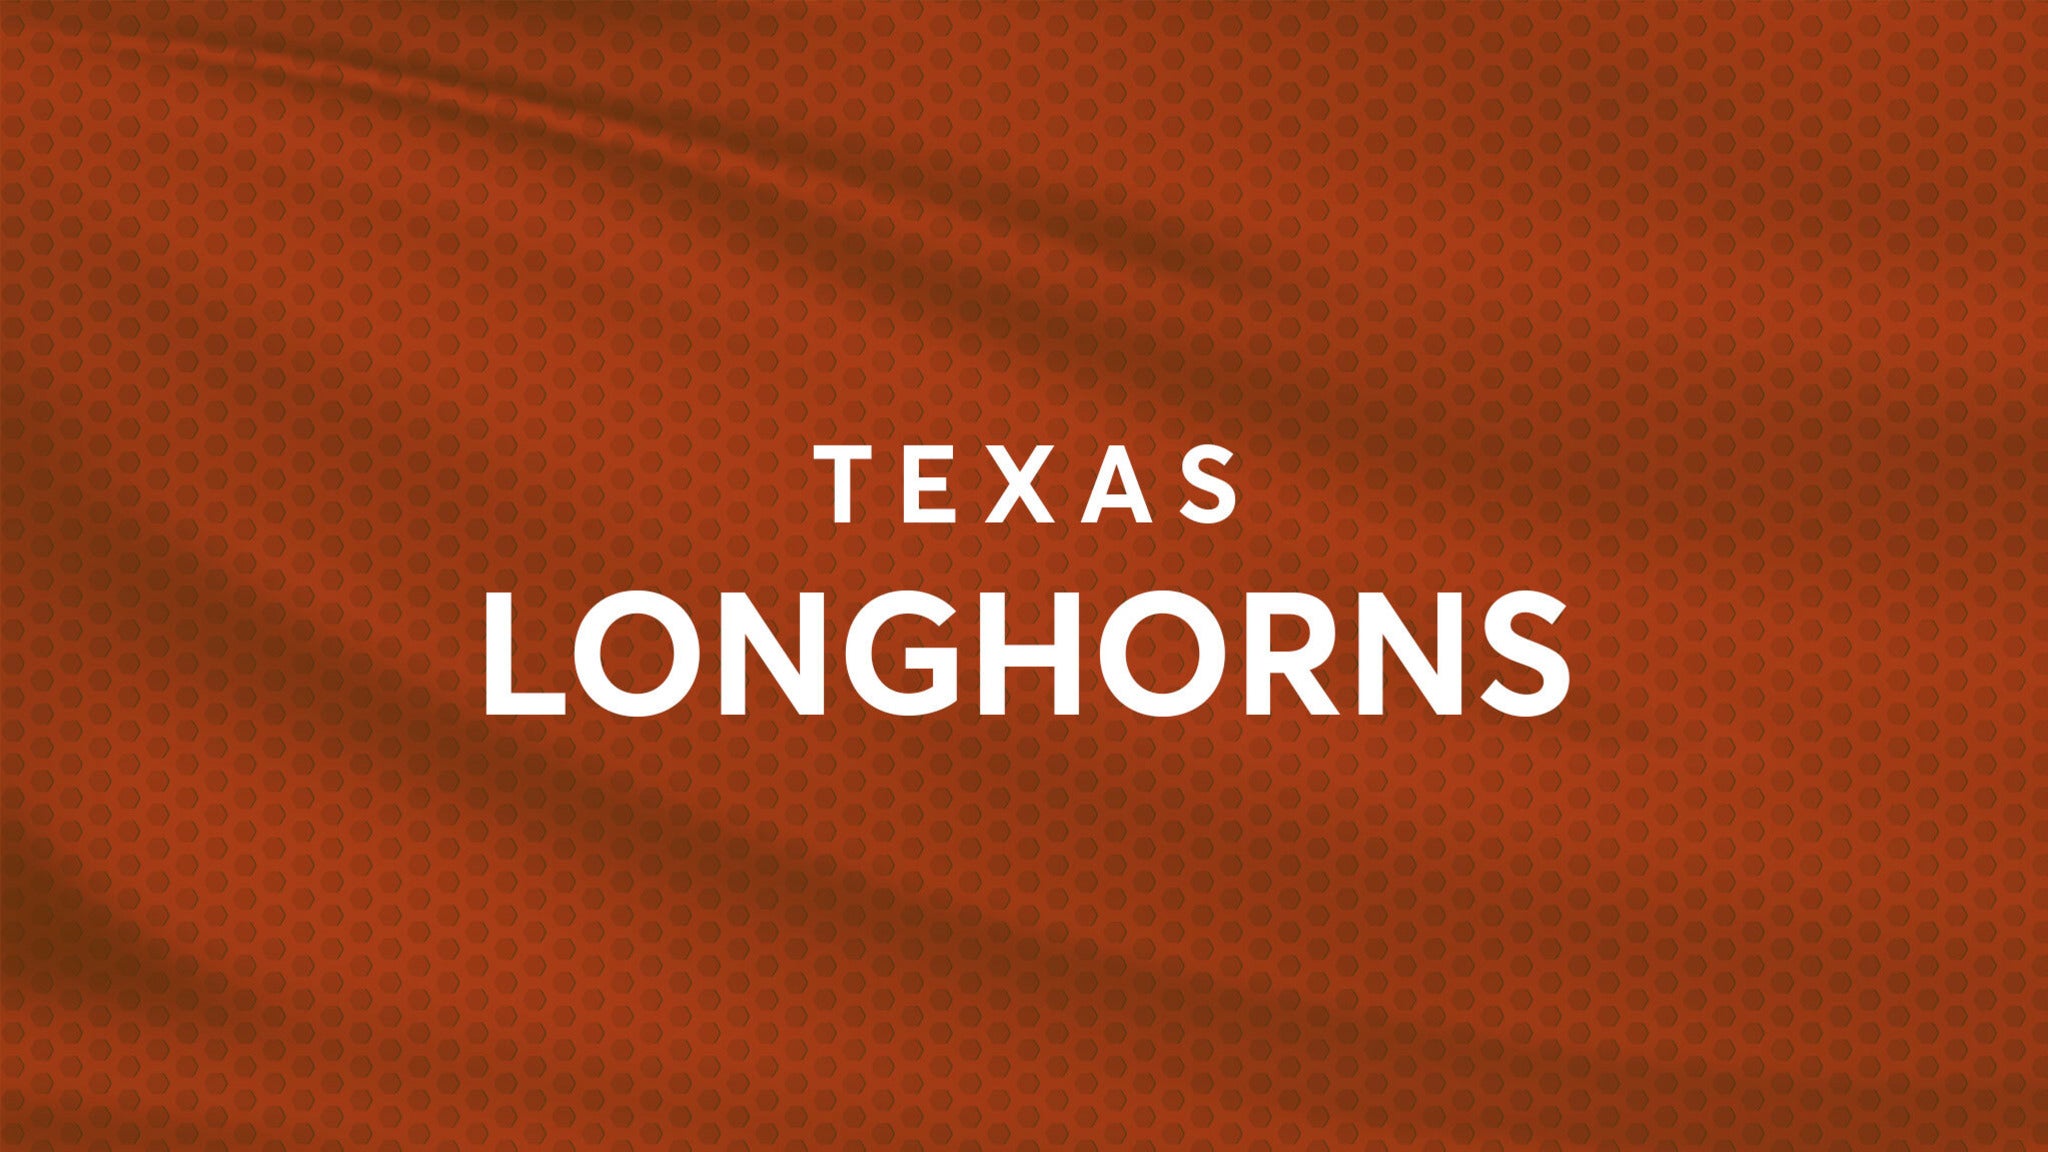 Texas Longhorns Baseball vs. Texas Southern Tigers Baseball